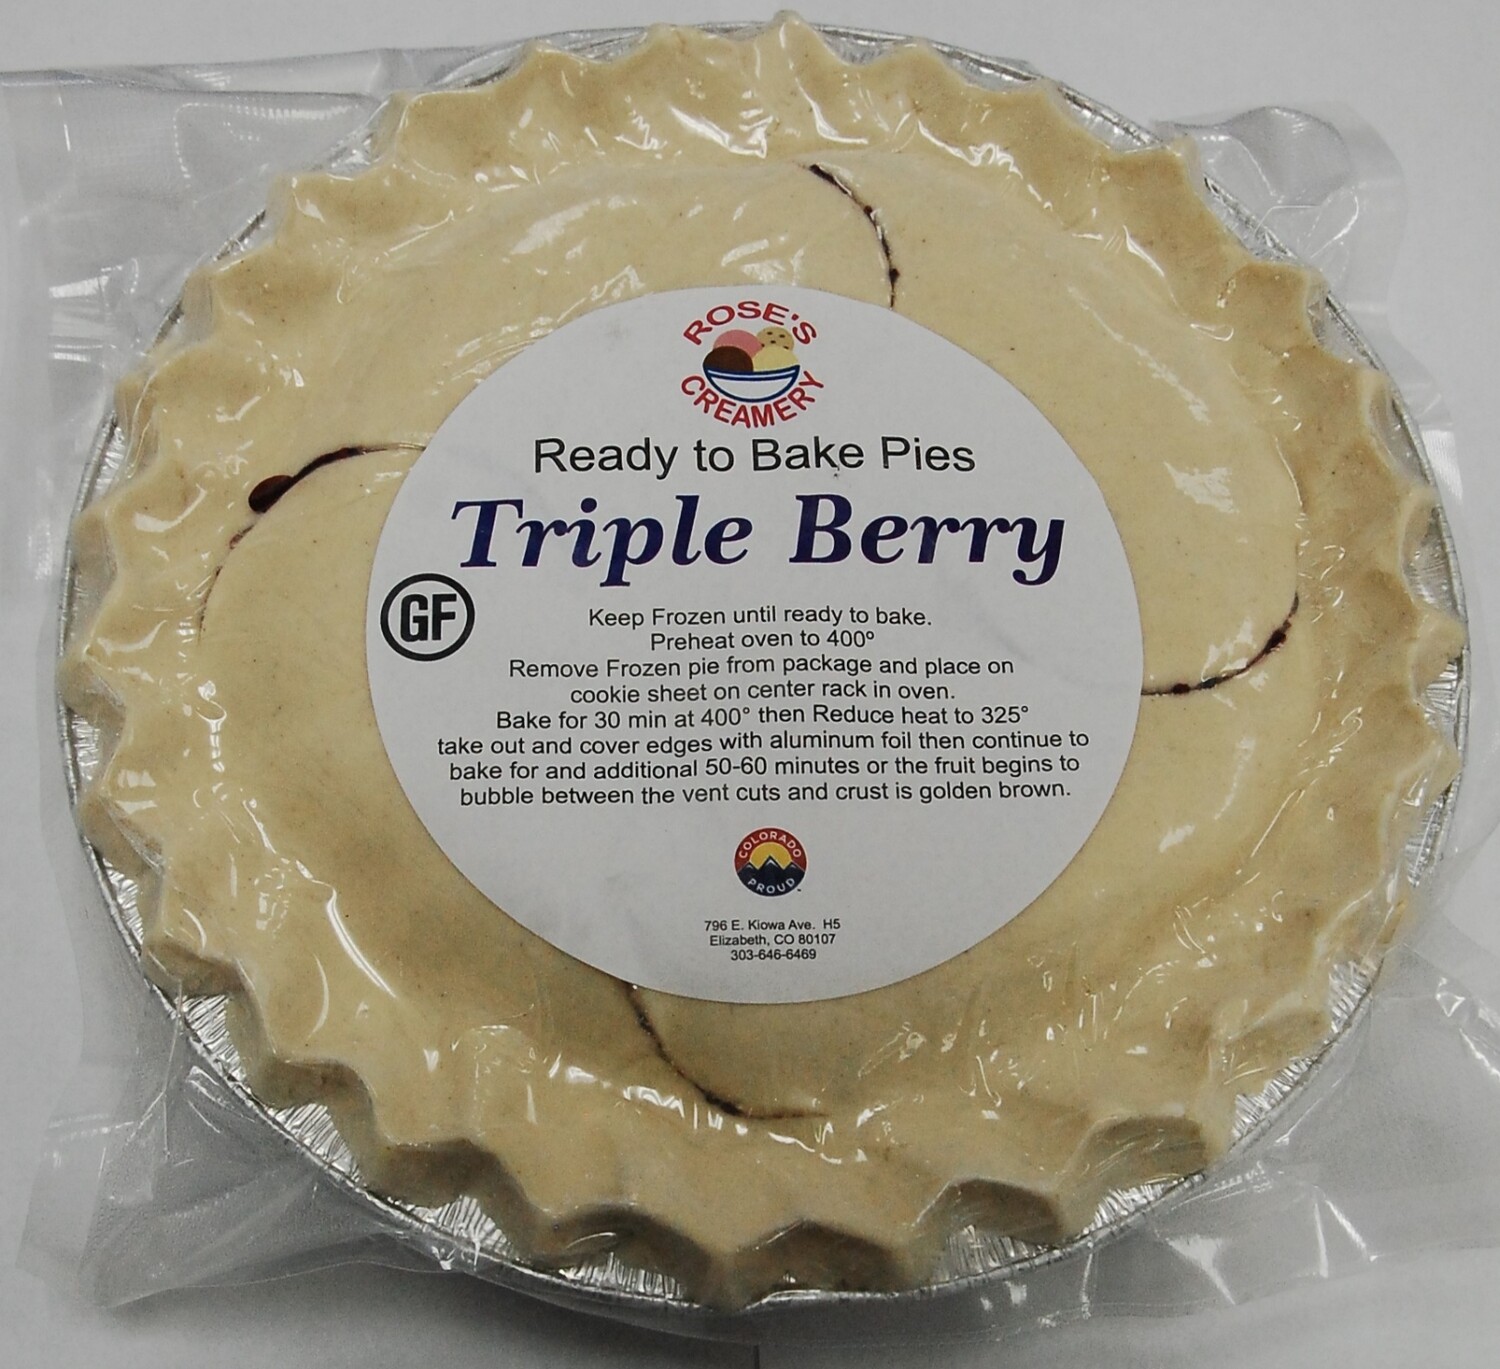 Roses GF Triple Berry Pie